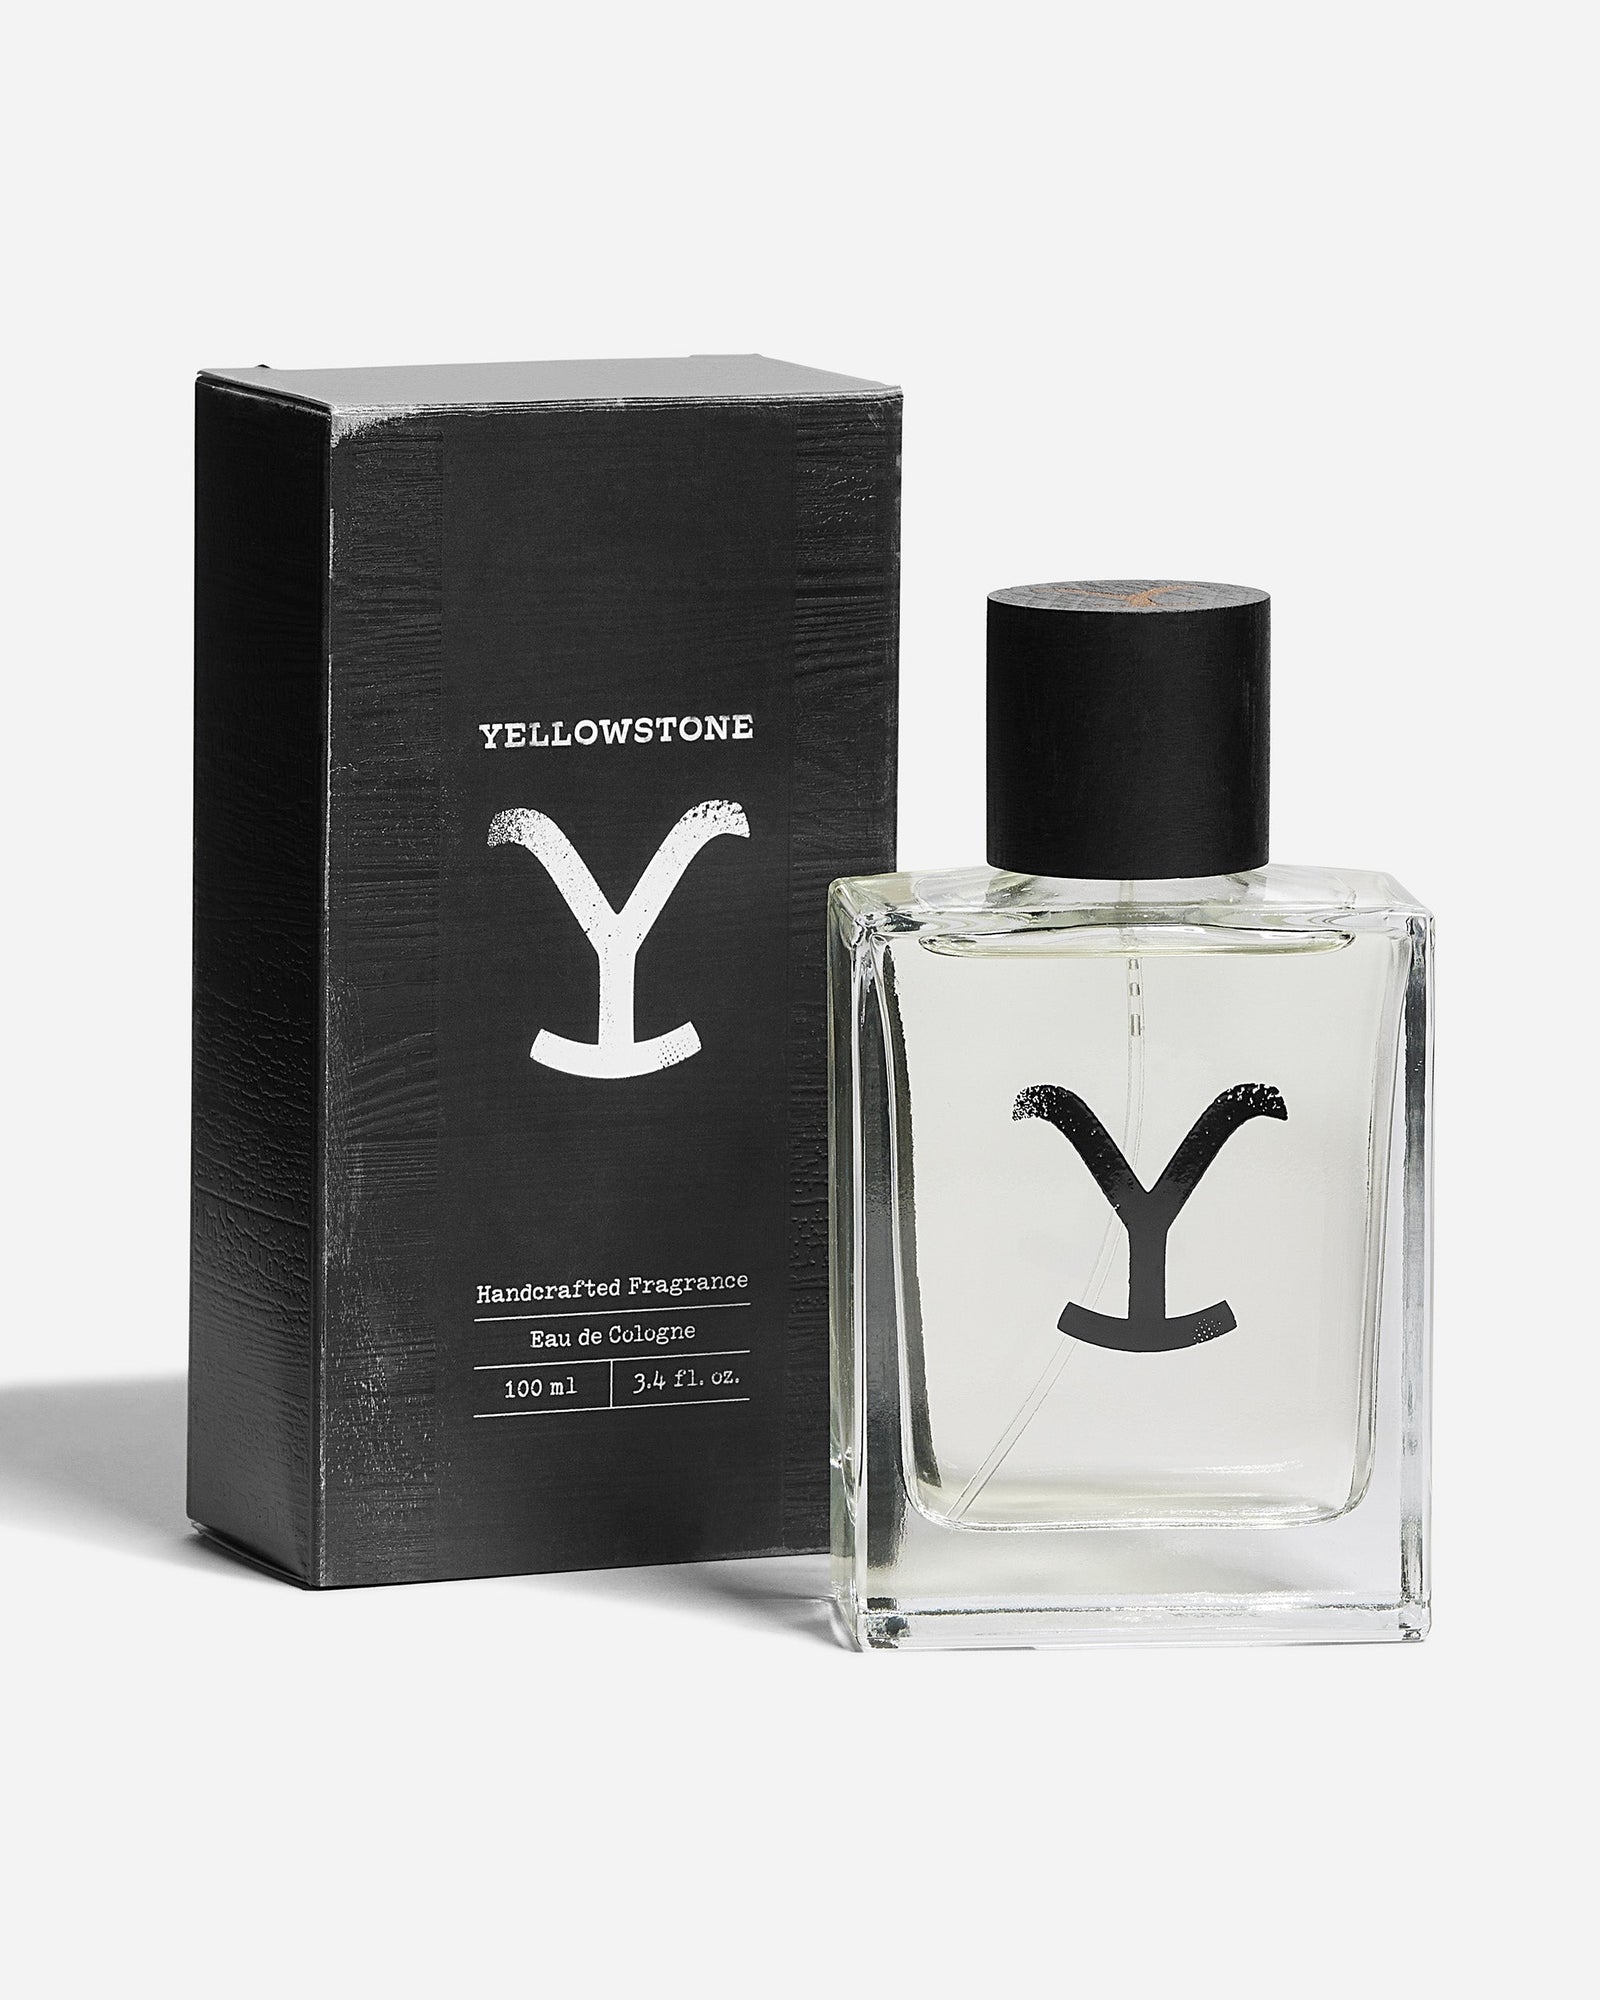 Yellowstone Men's Fragrance: Eau De Cologne